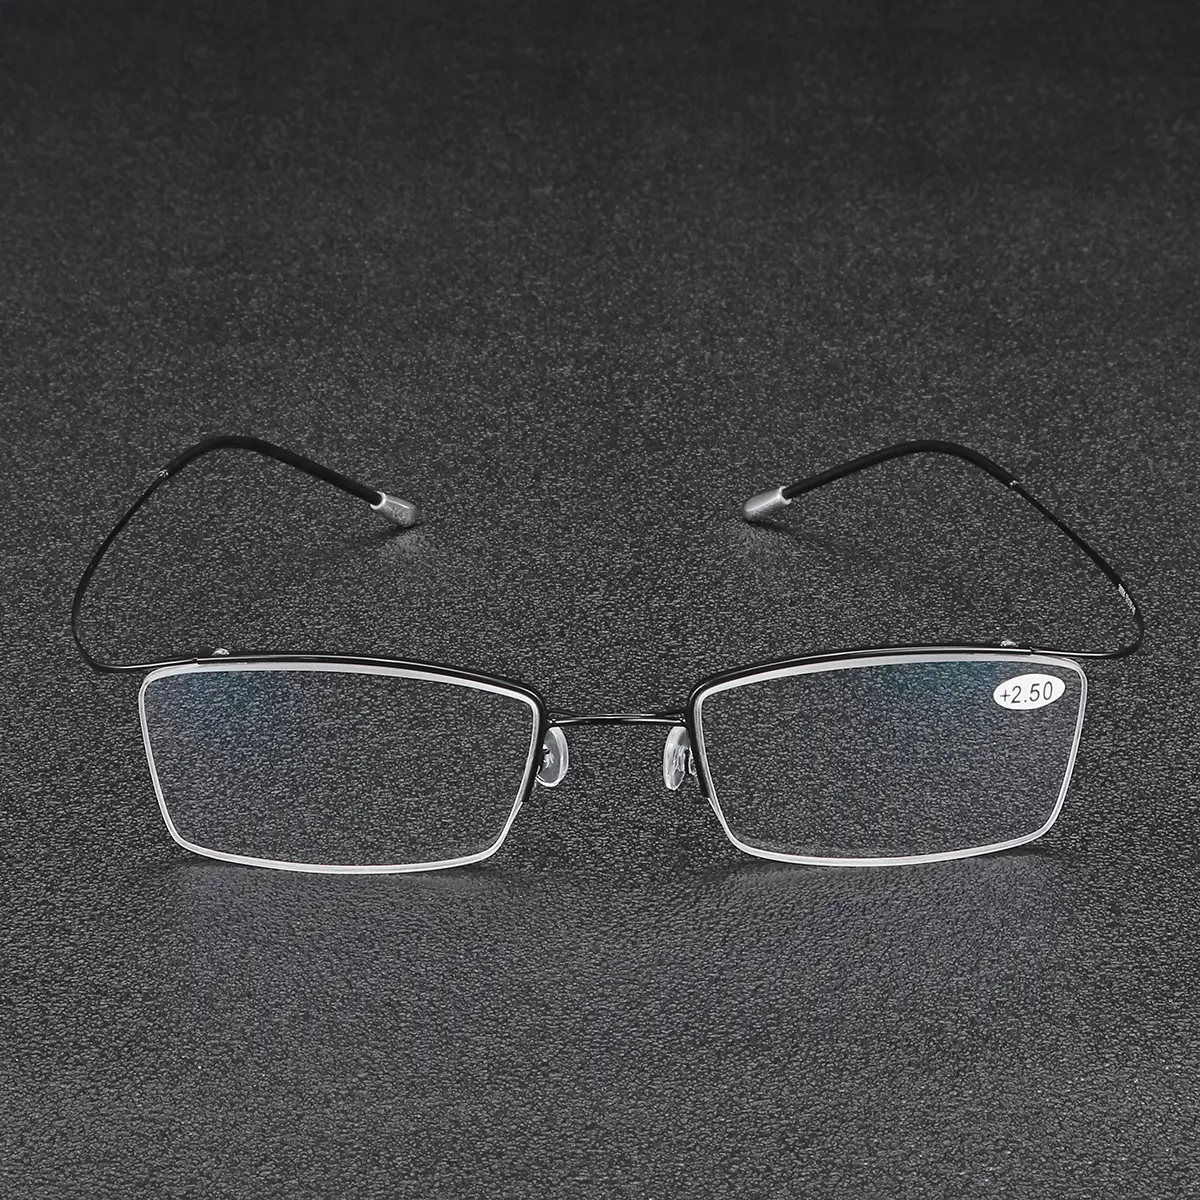 BRAODISON Presbyopic Reading Glasses HD Coated Resin Lens